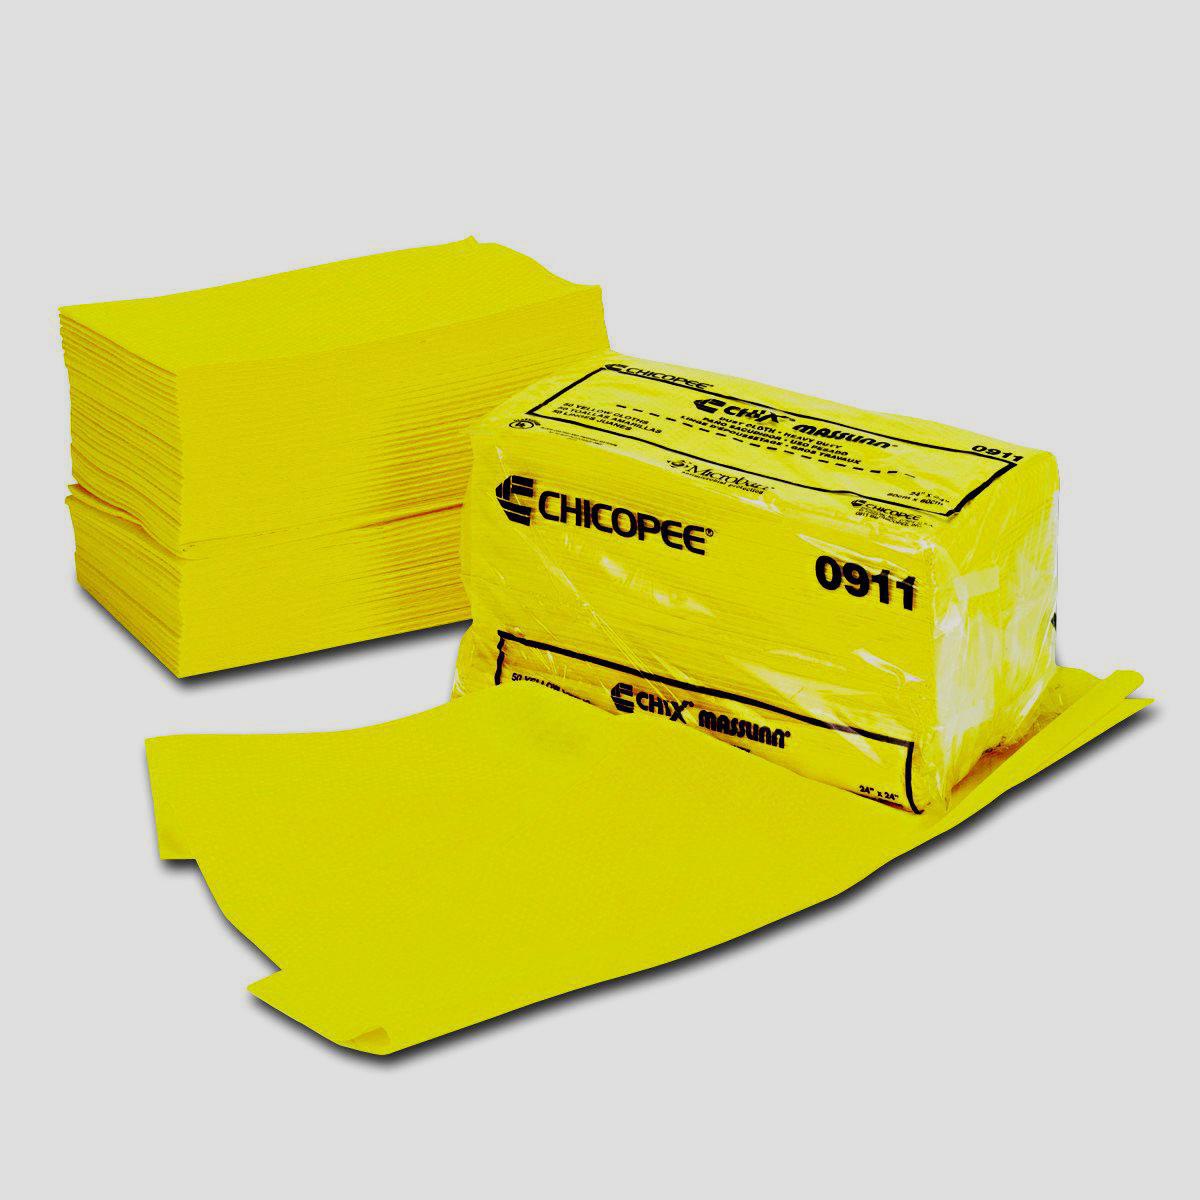 Chicopee 0911 Masslinn 24" x 24" Yellow Heavy-Duty Dusting Cloth - 100/Case